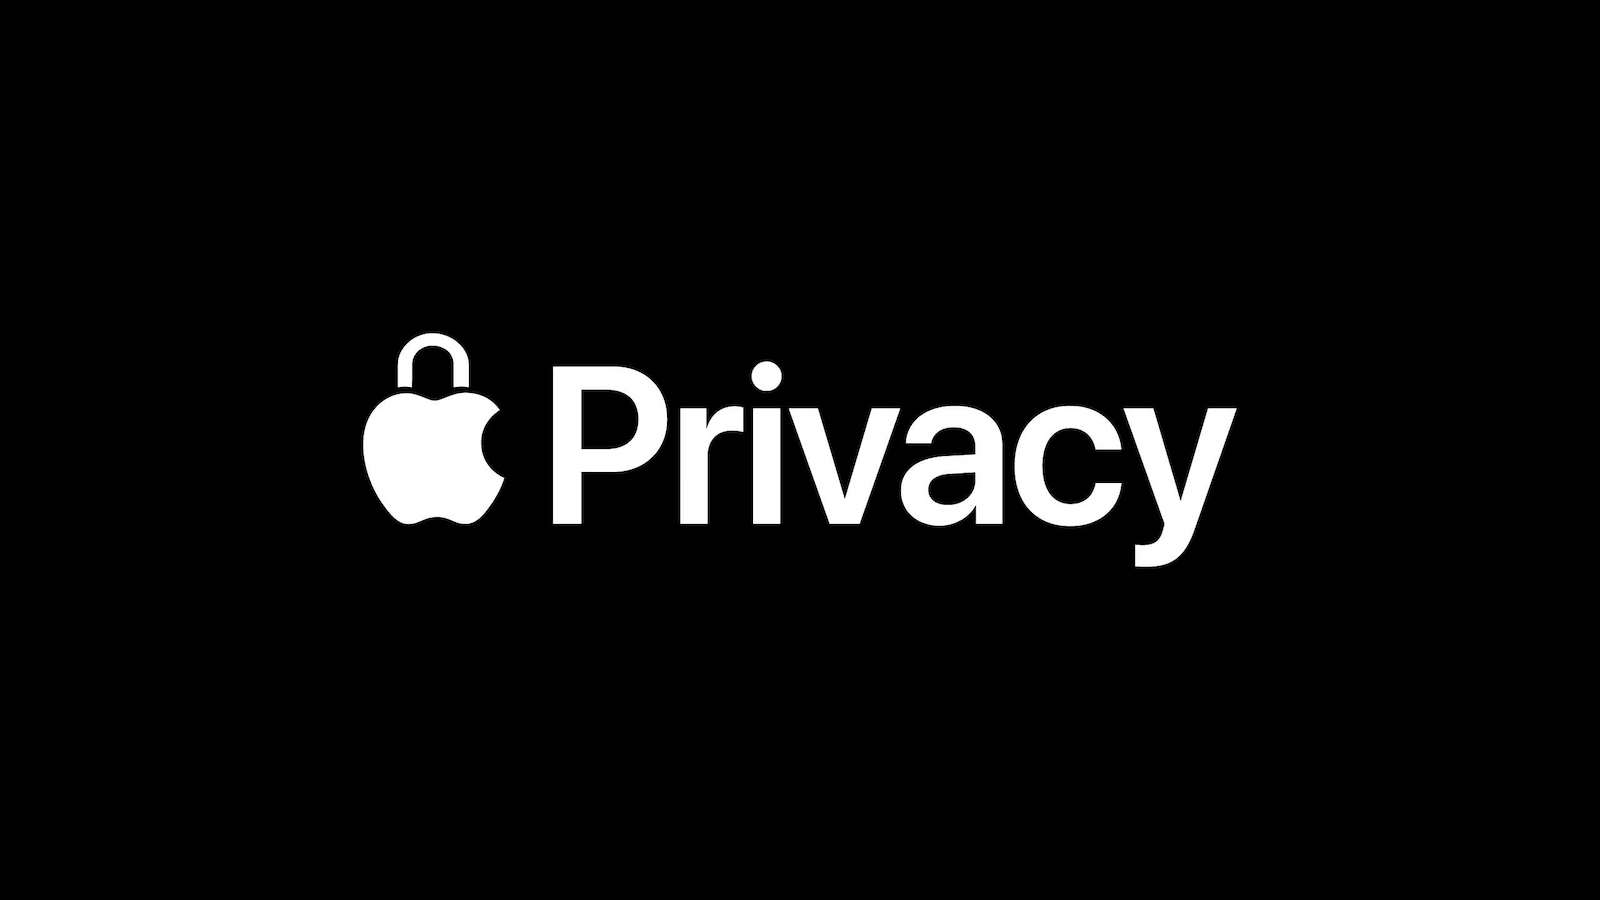 Apple privacy day privacy logo 01282021